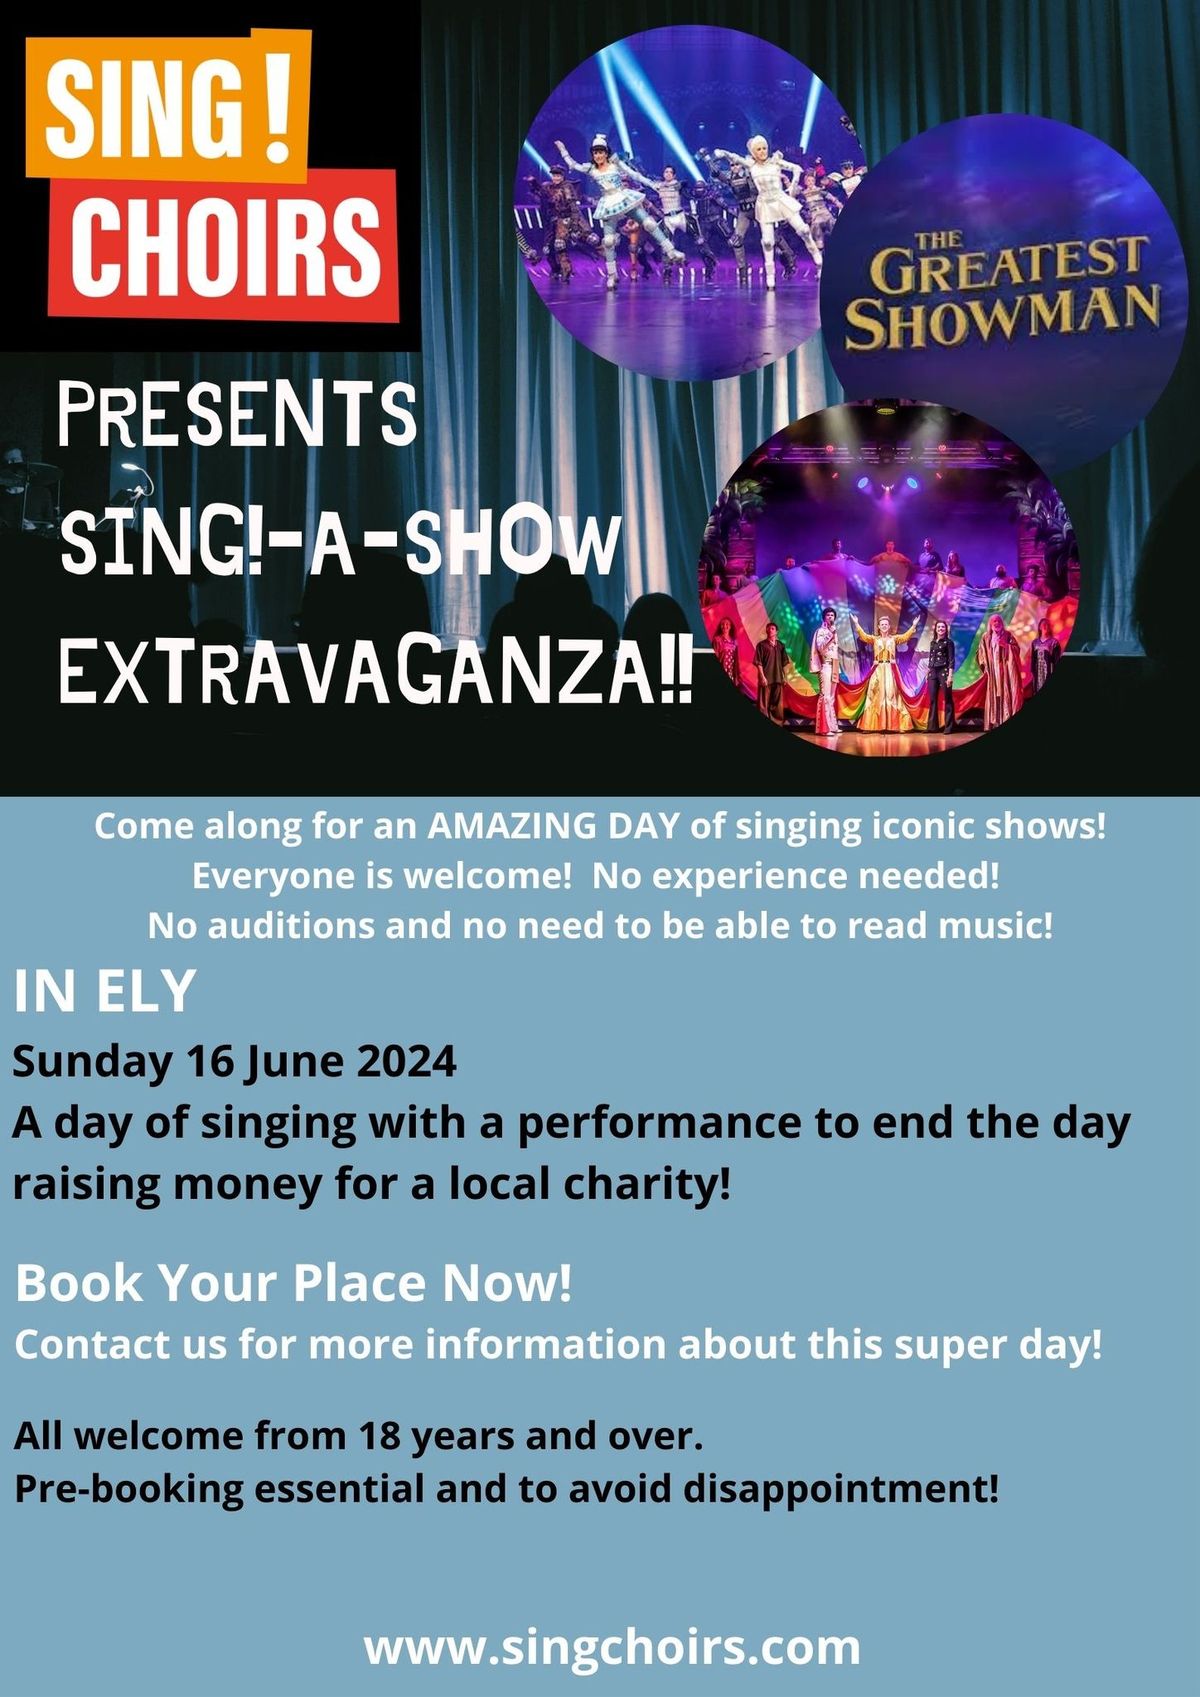 Sing!-A-Show EXTRAVAGANZA!!